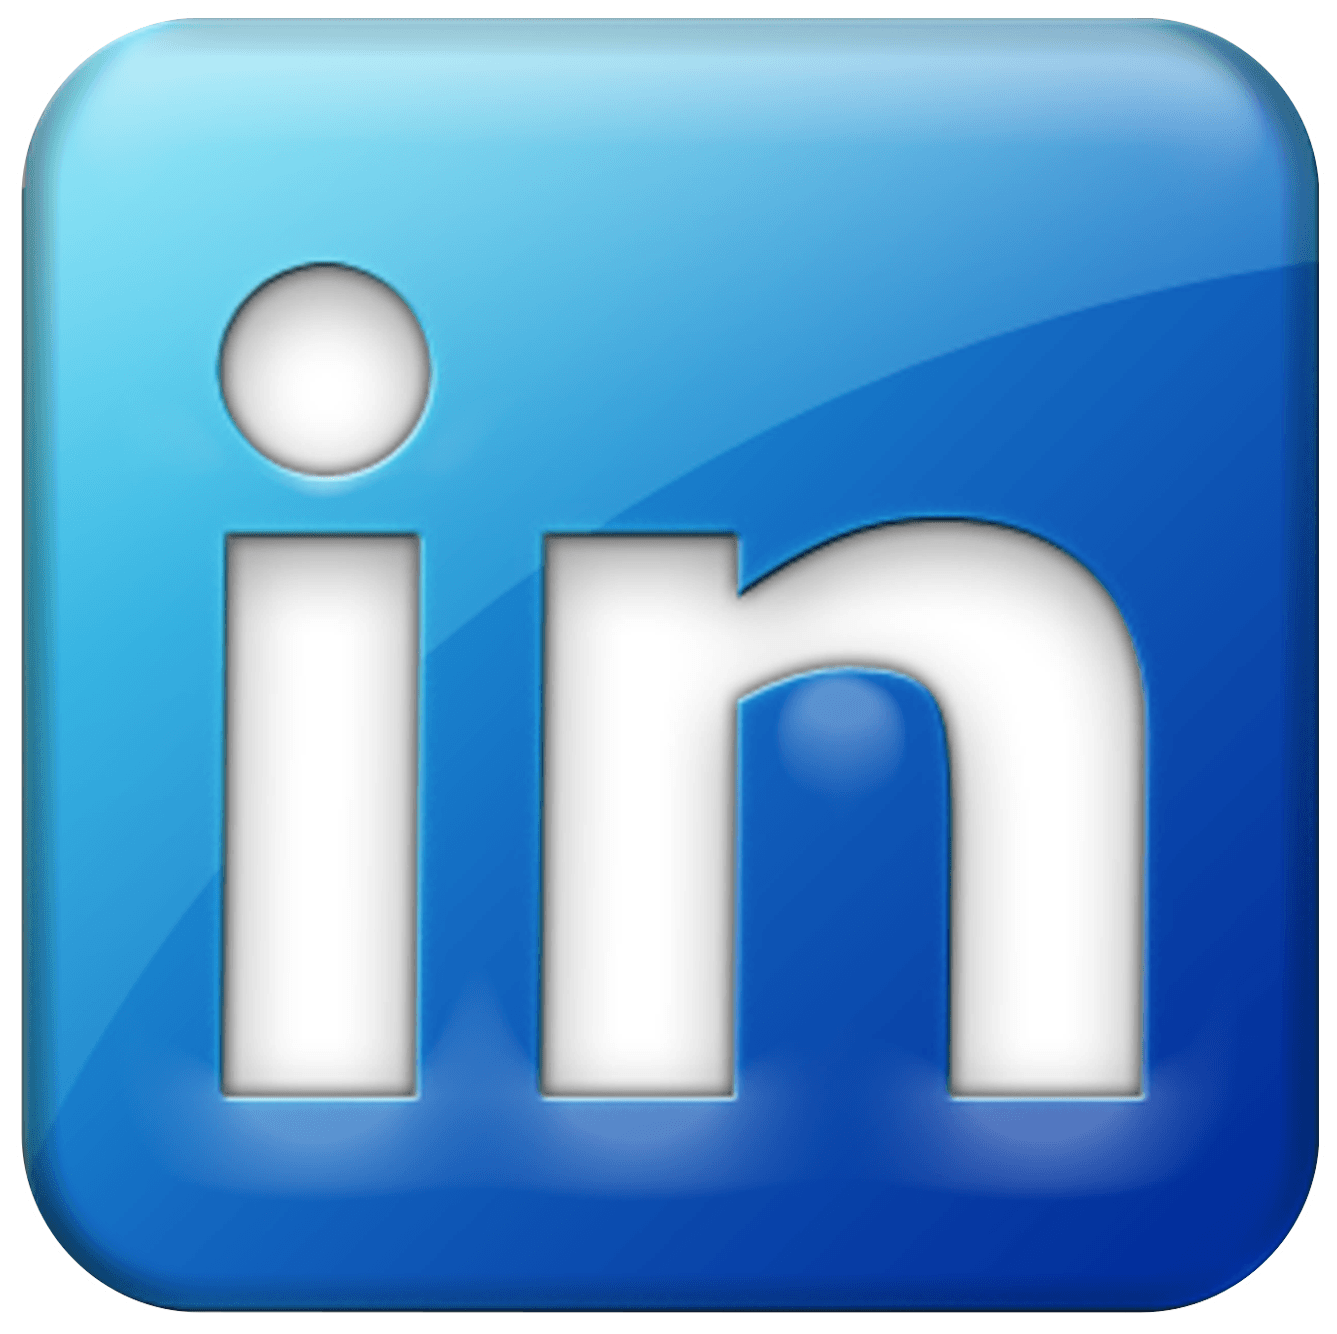 LinkedIn Icon Vector Logo - LinkedIn Logo Vector PNG Free Download